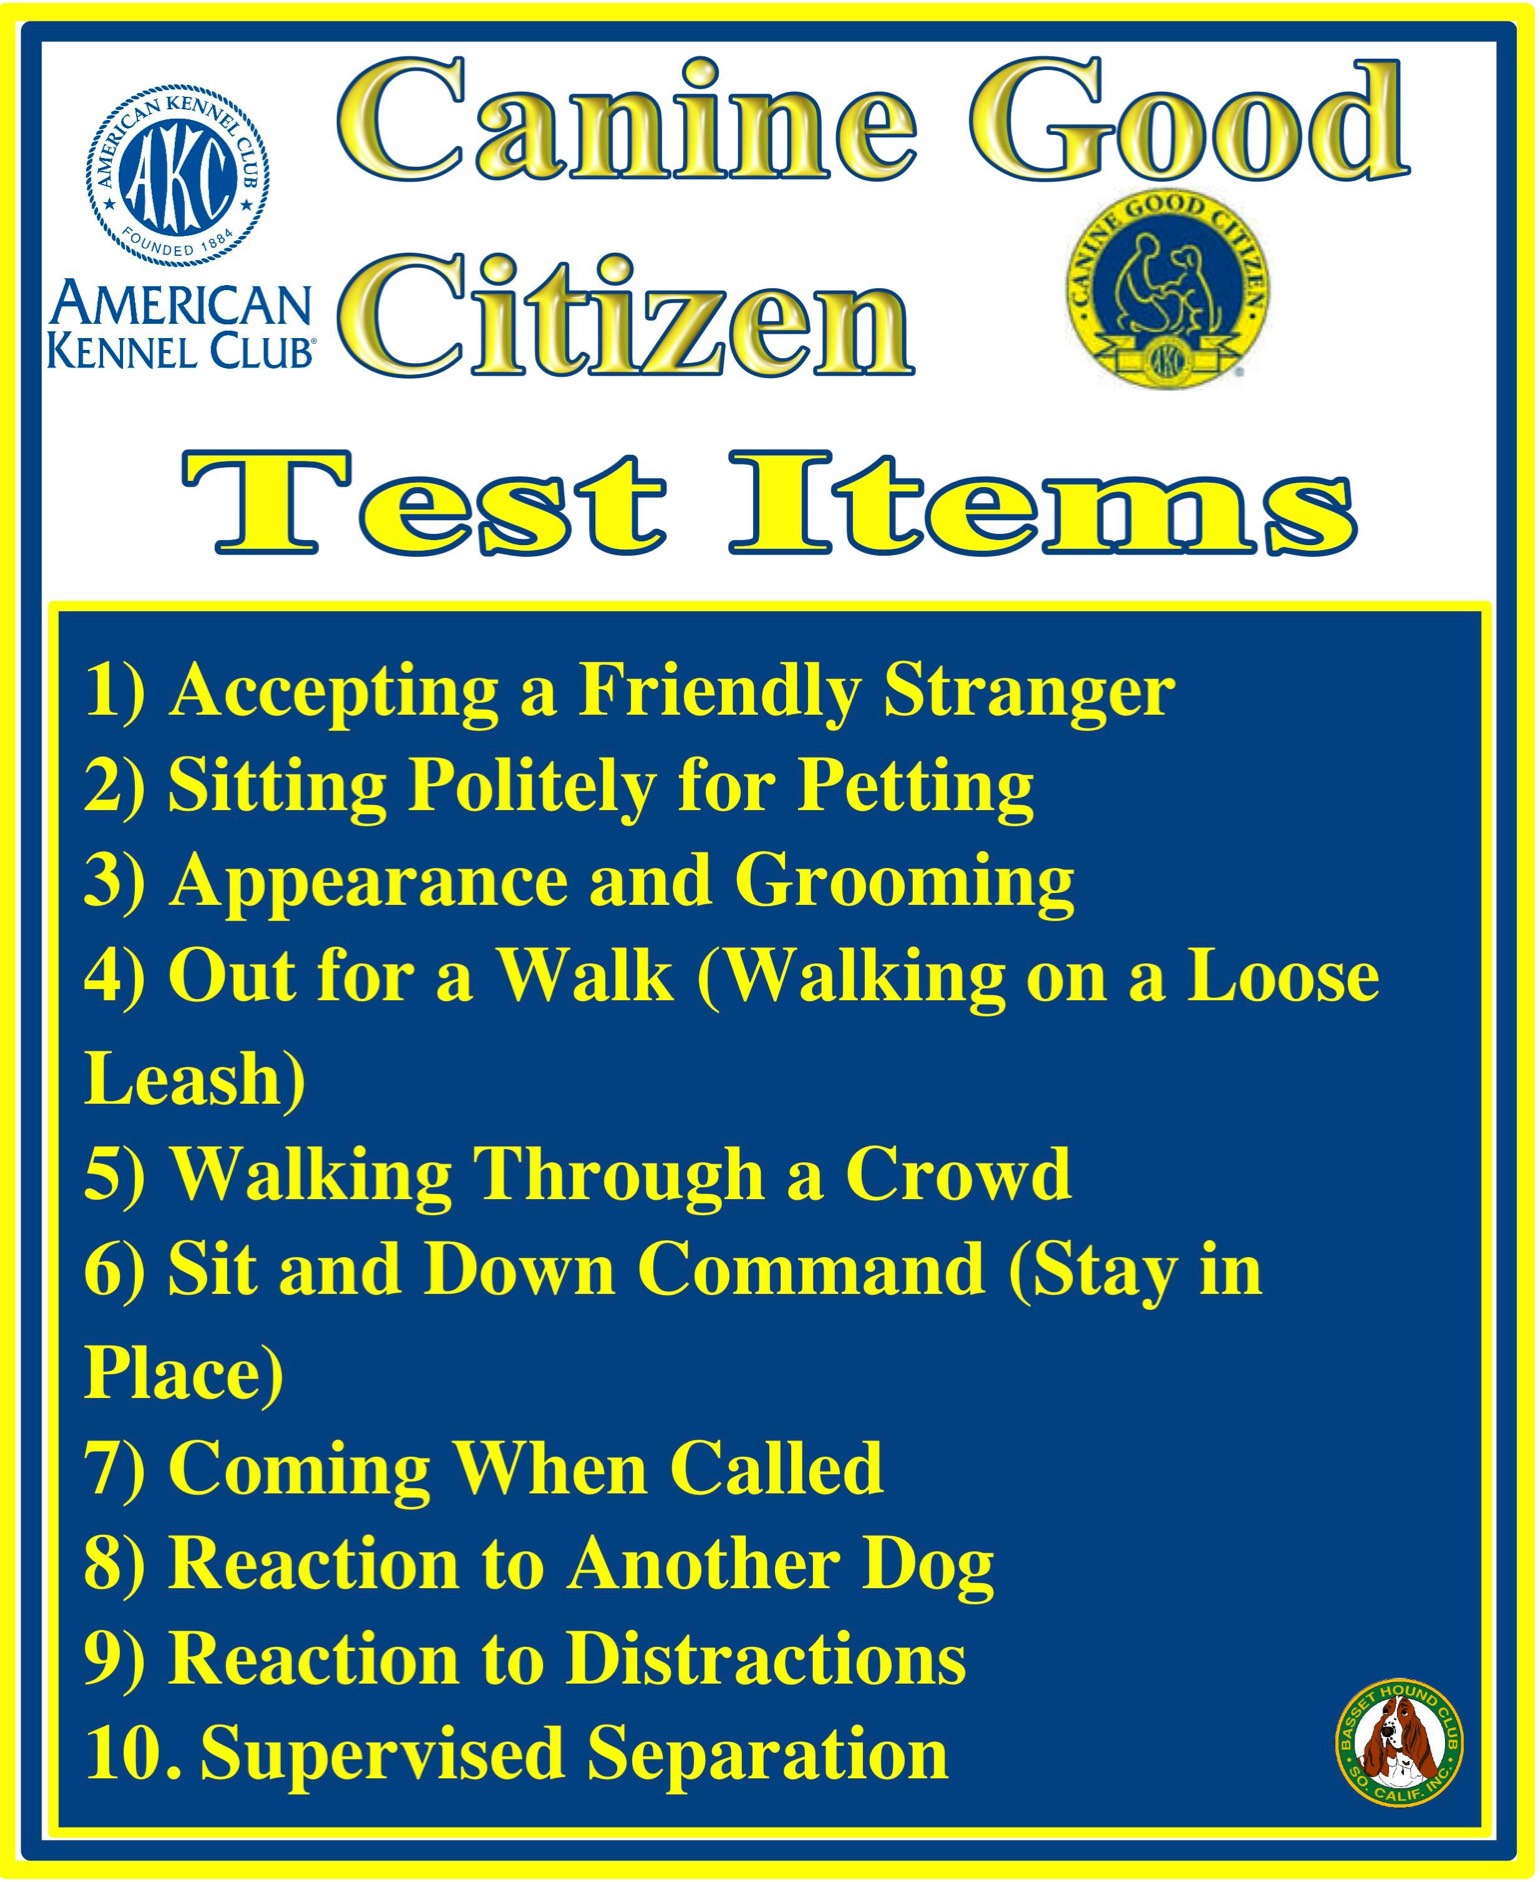 Total 55+ imagen canine good citizen requirements